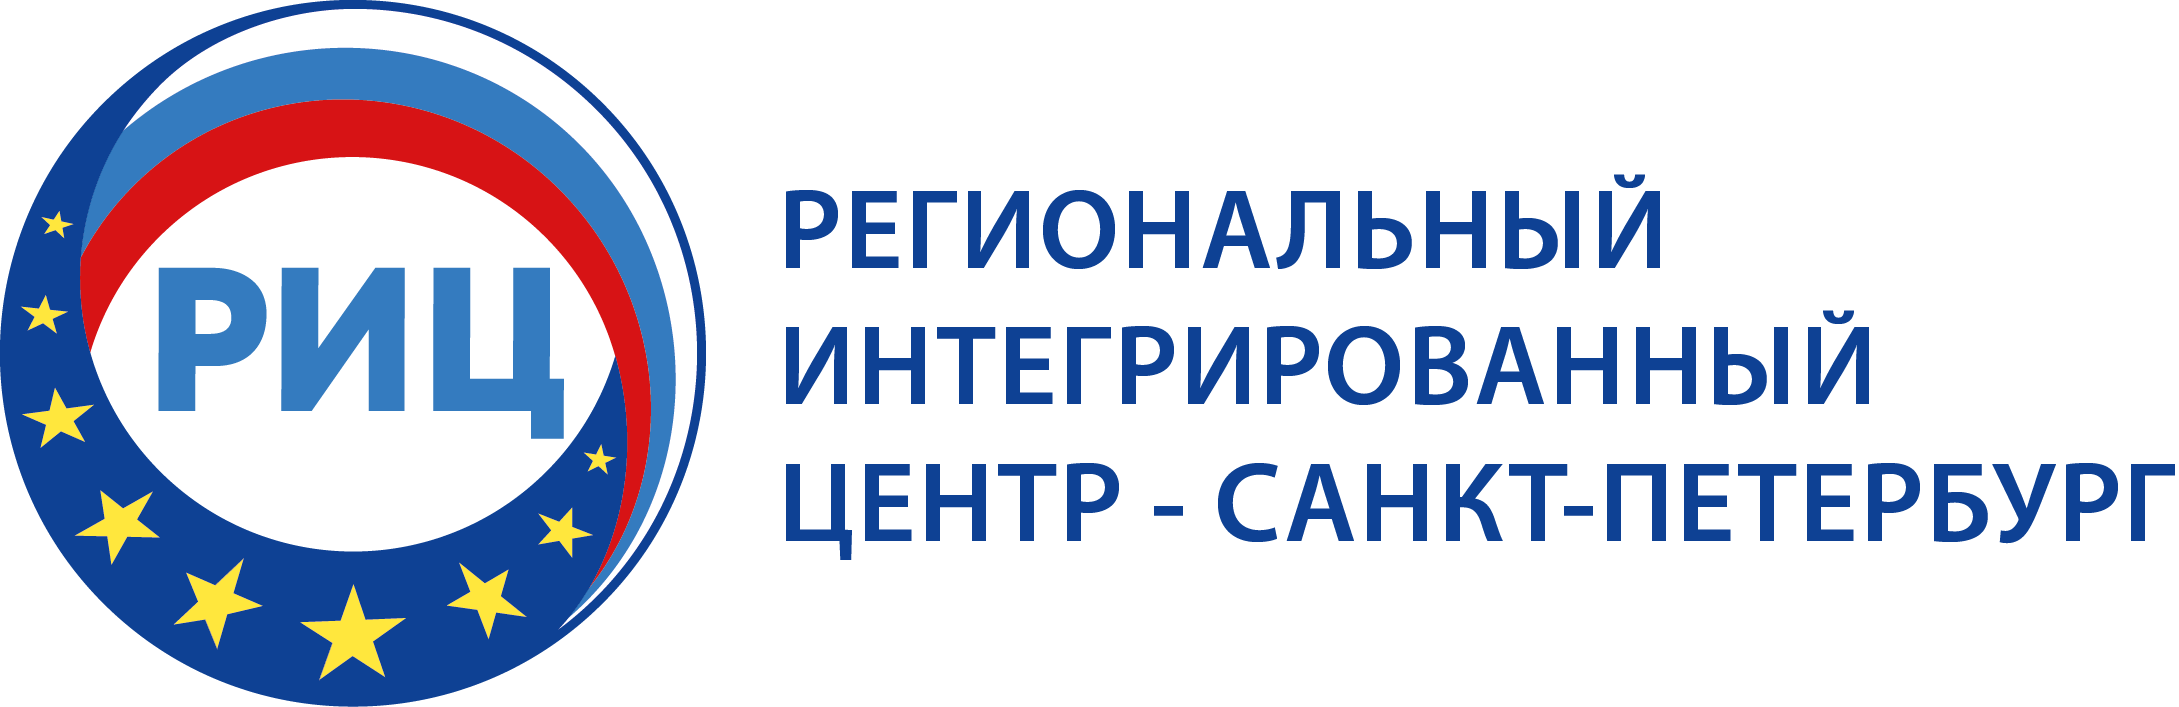 CTM-logo